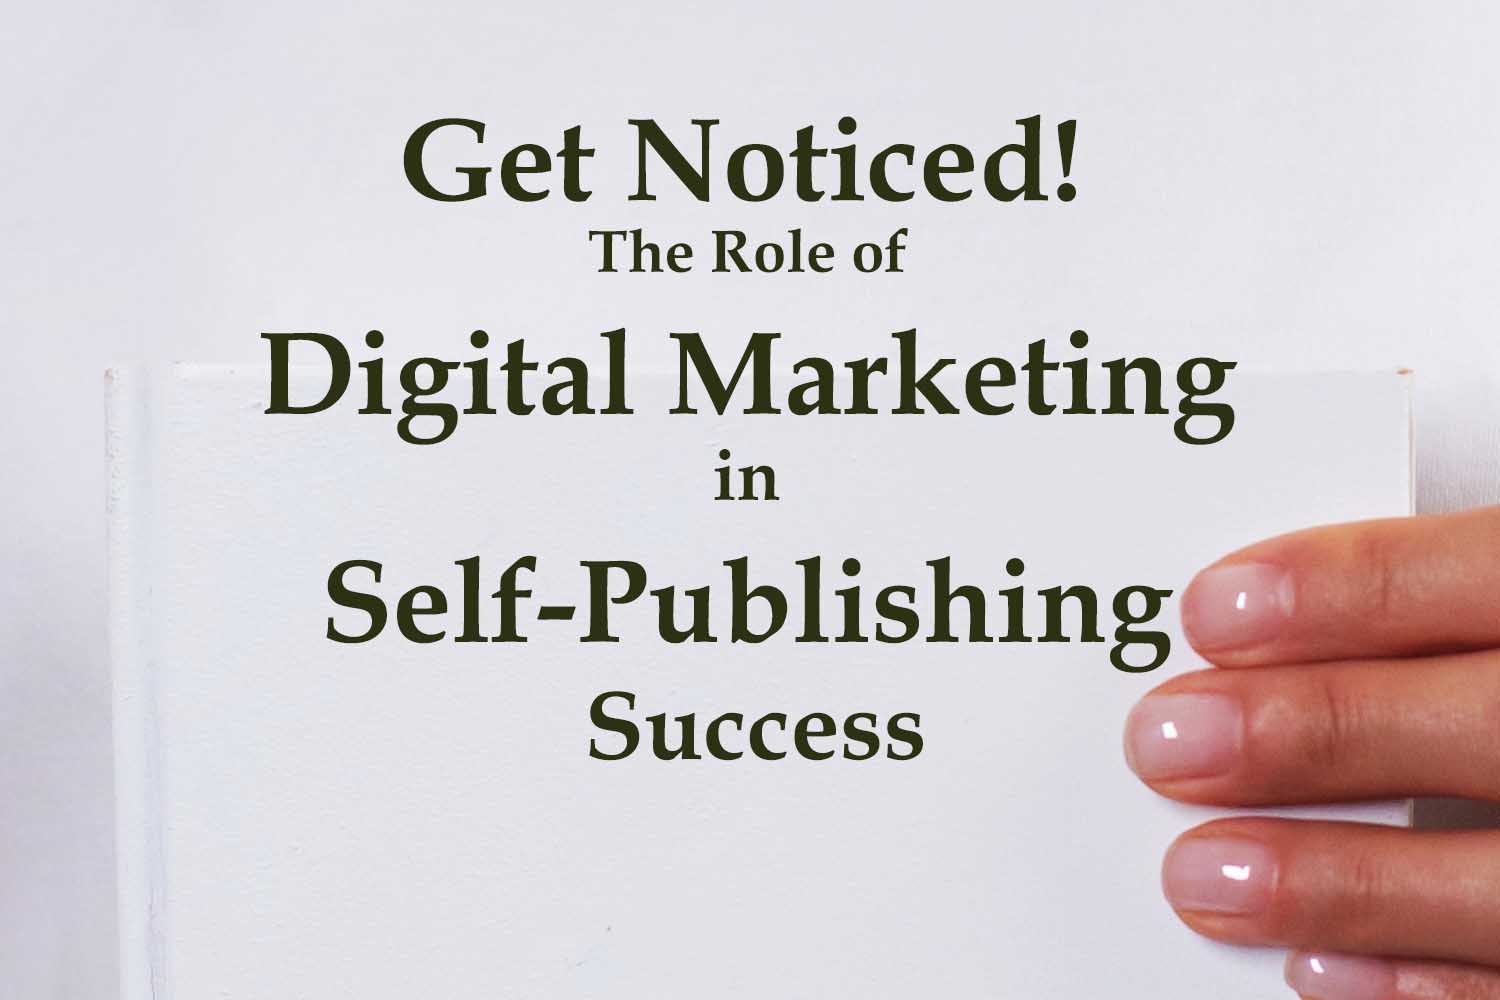 Digital Marketing in Self-Publishing Success